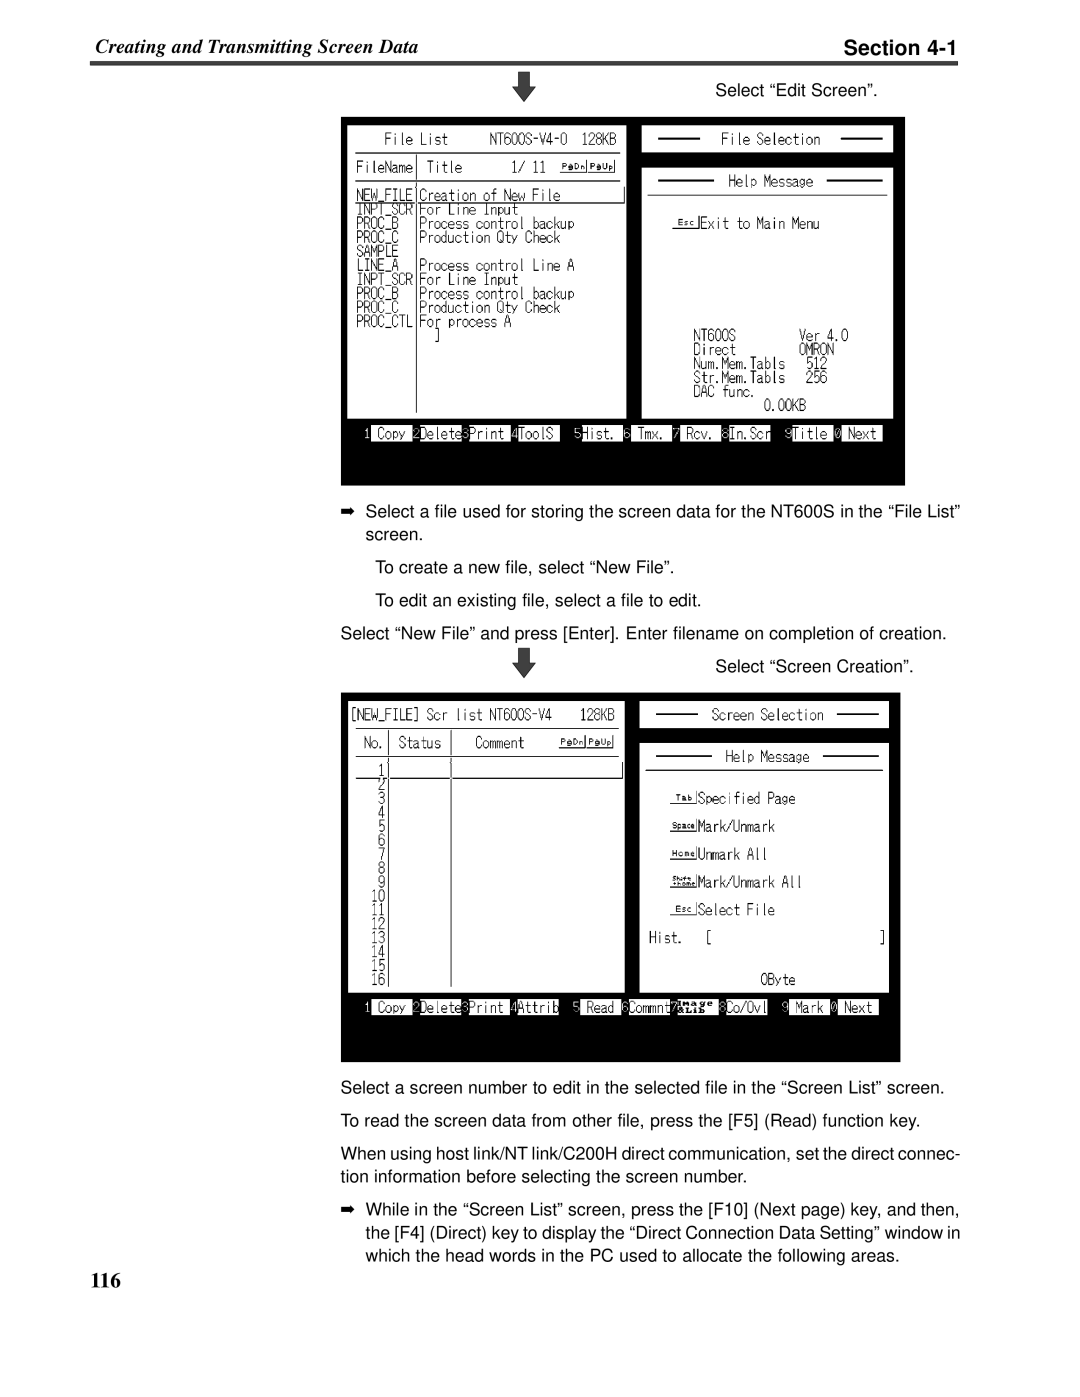 Omron V022-E3-1 operation manual Section, Select “Edit Screen” 